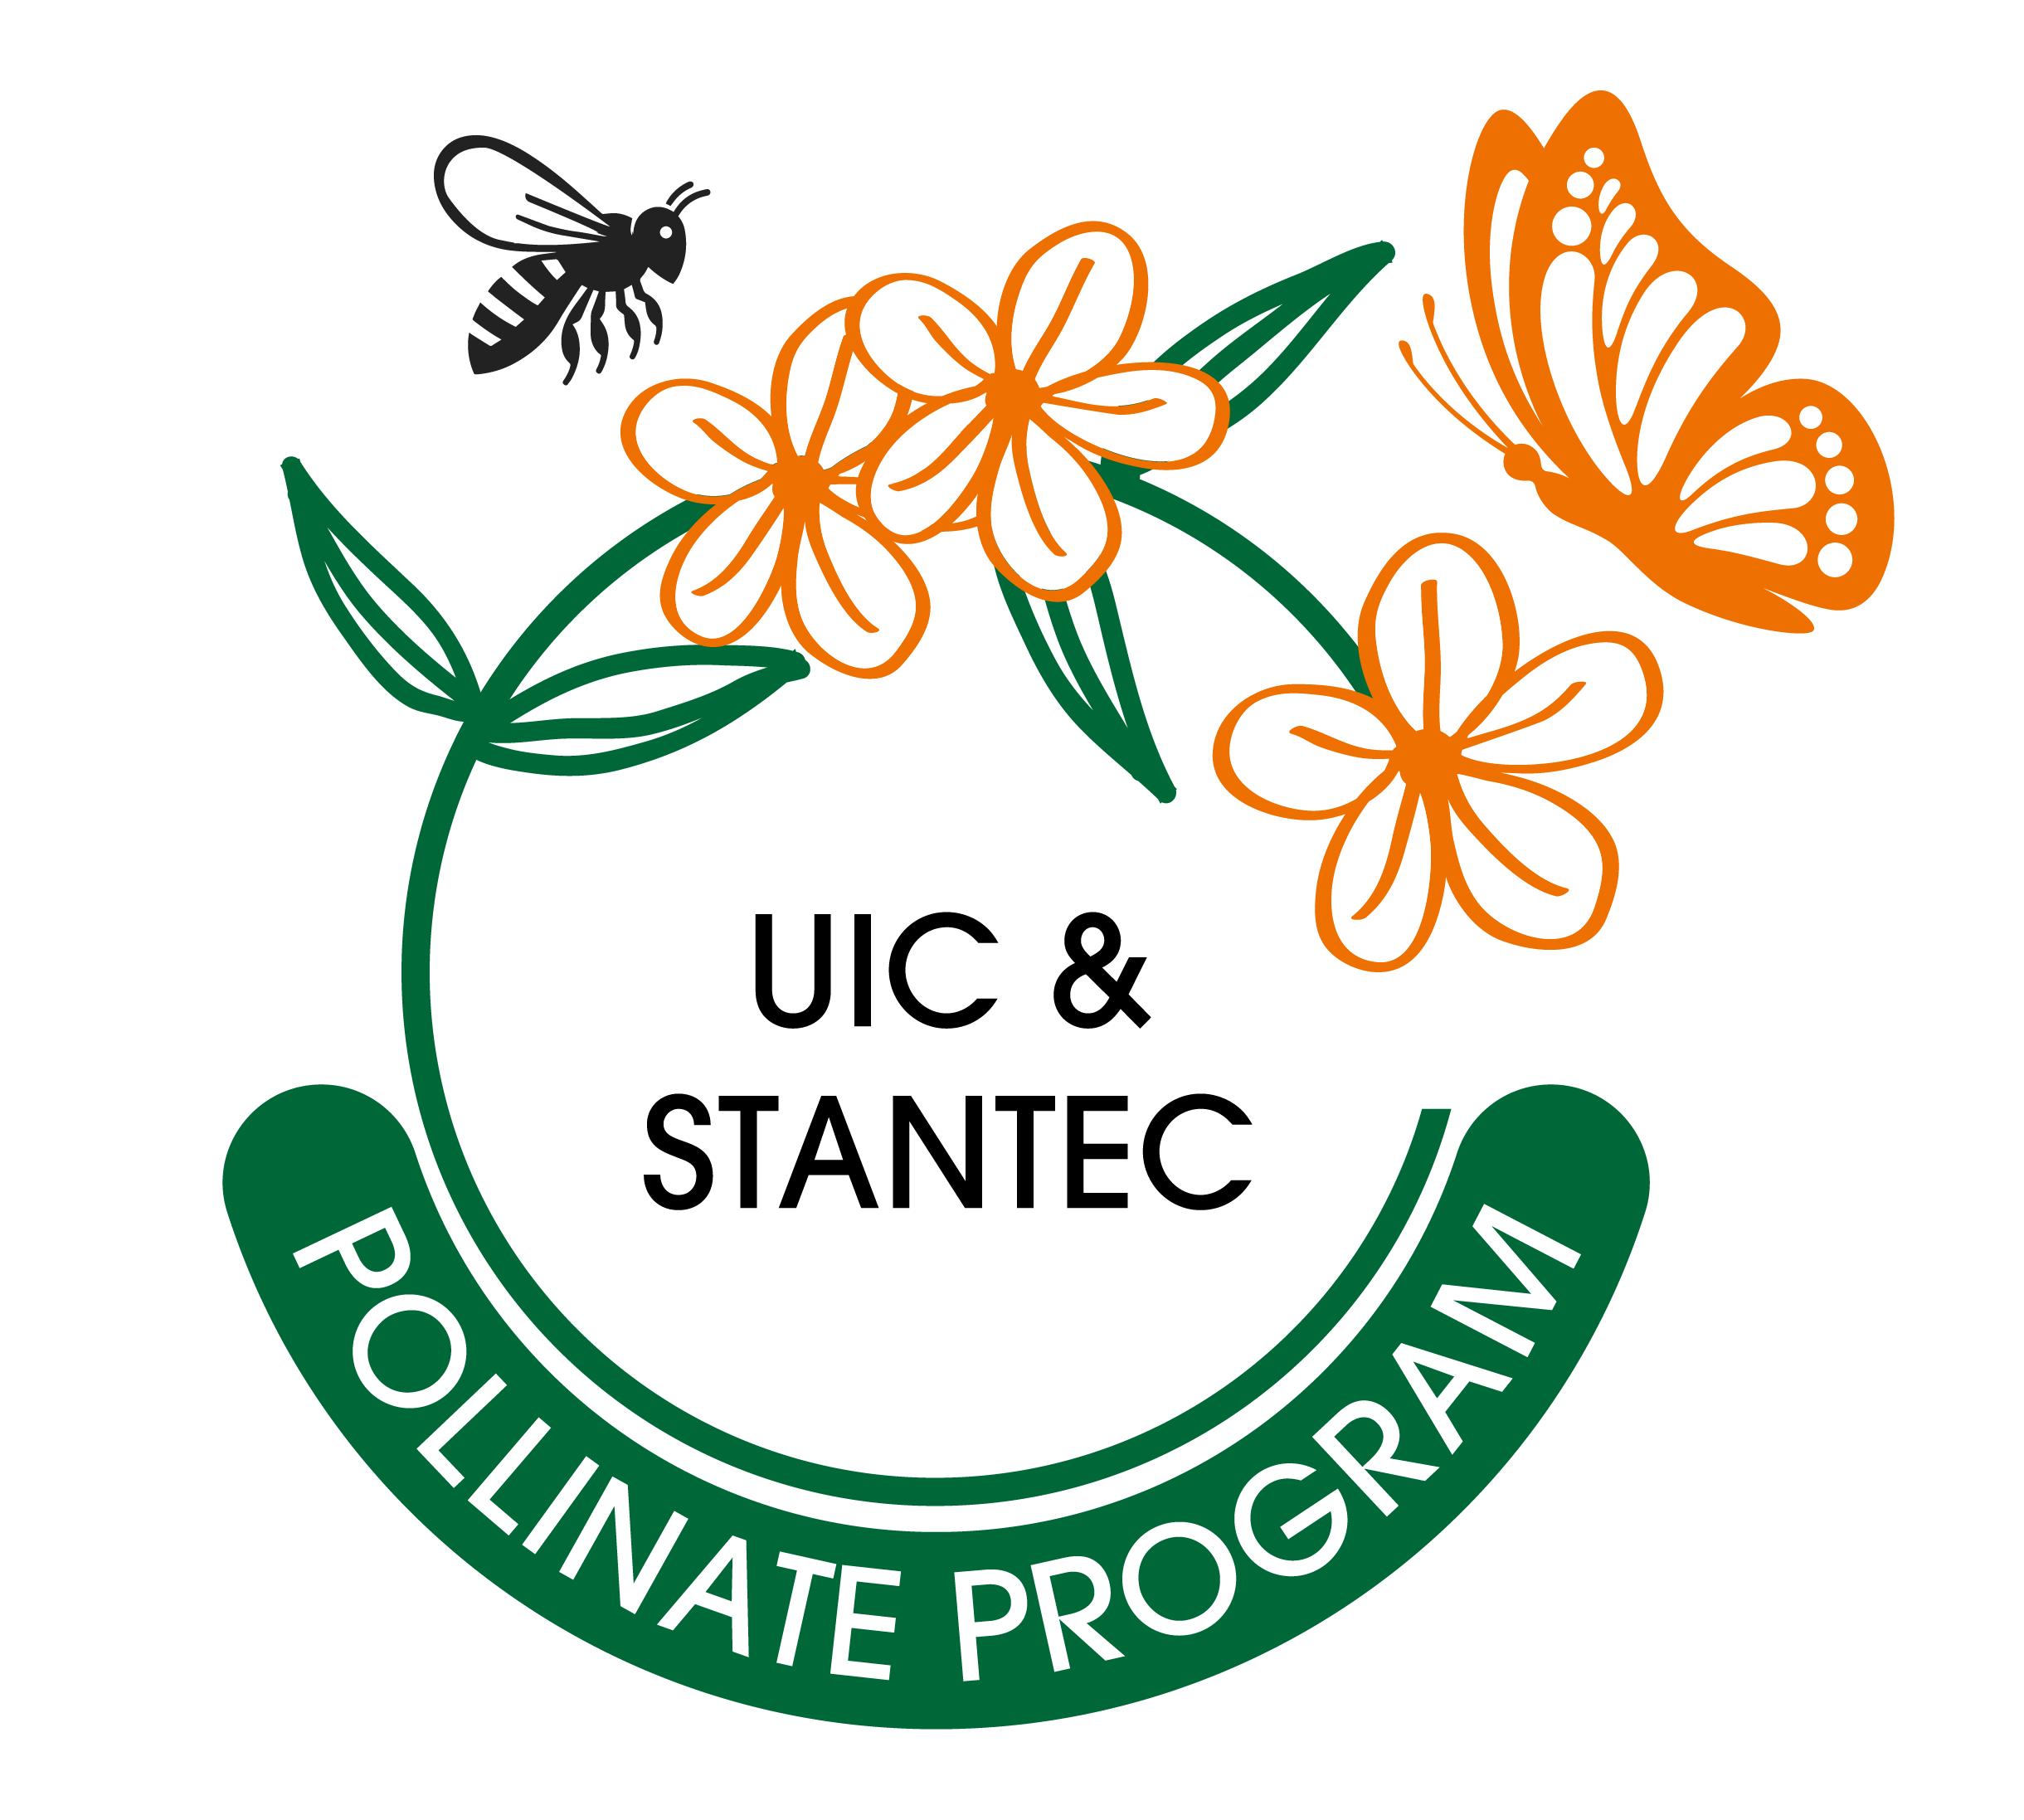 The logo of the UIC & Stantec Pollinator Program